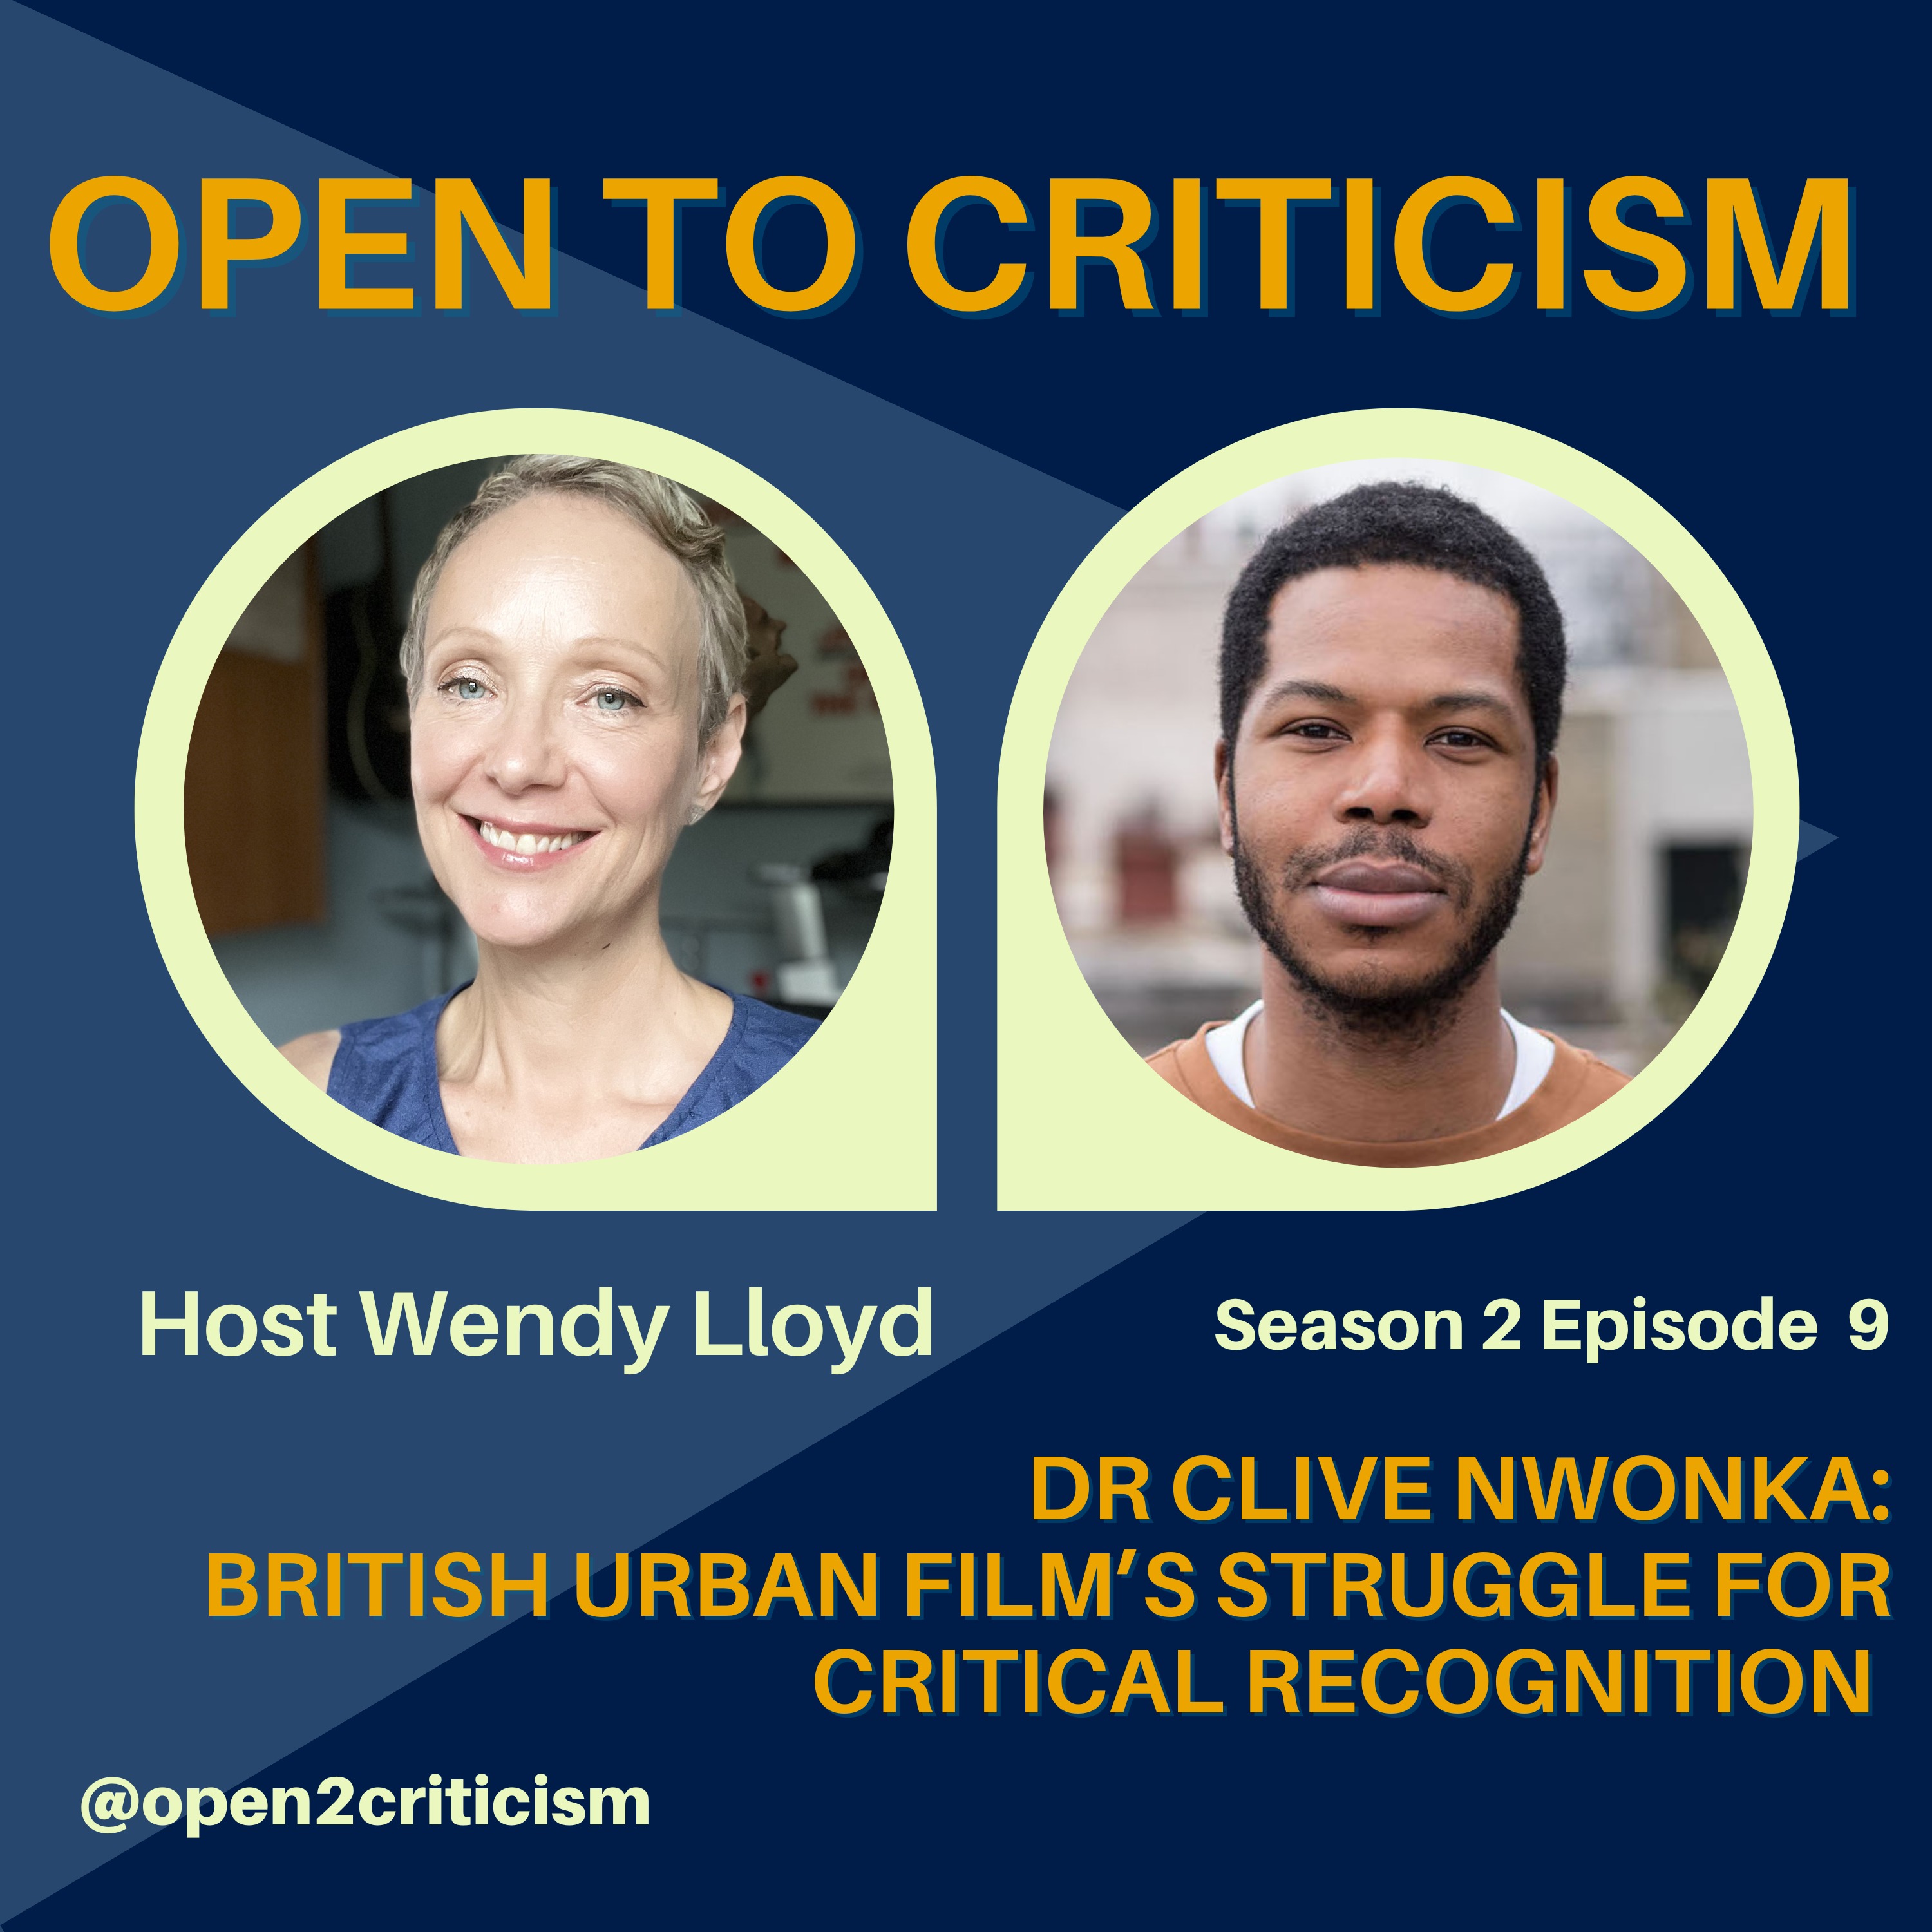 Dr Clive Nwonka: British Urban Film's Struggle for Critical Recognition